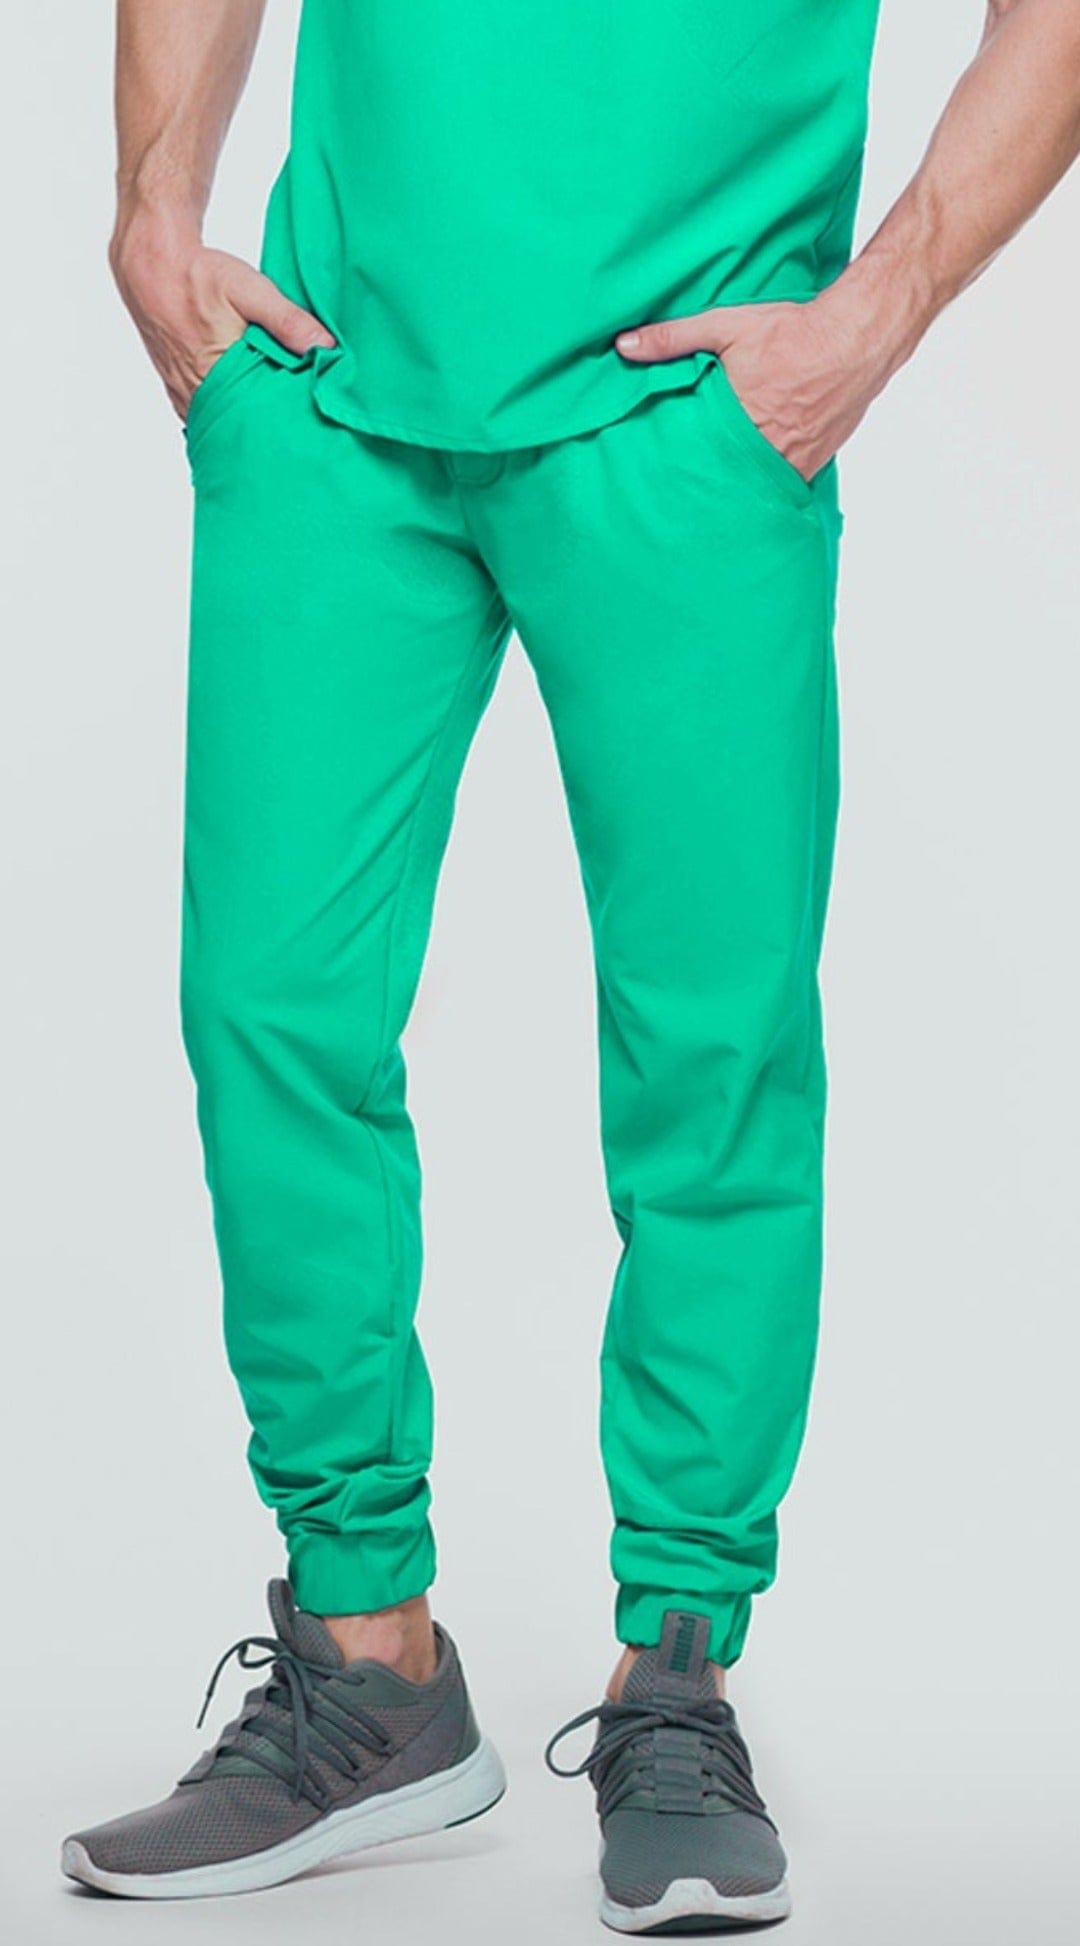 Kanaus® Pants Vanguard Minty Green | Caballero - Kanaus